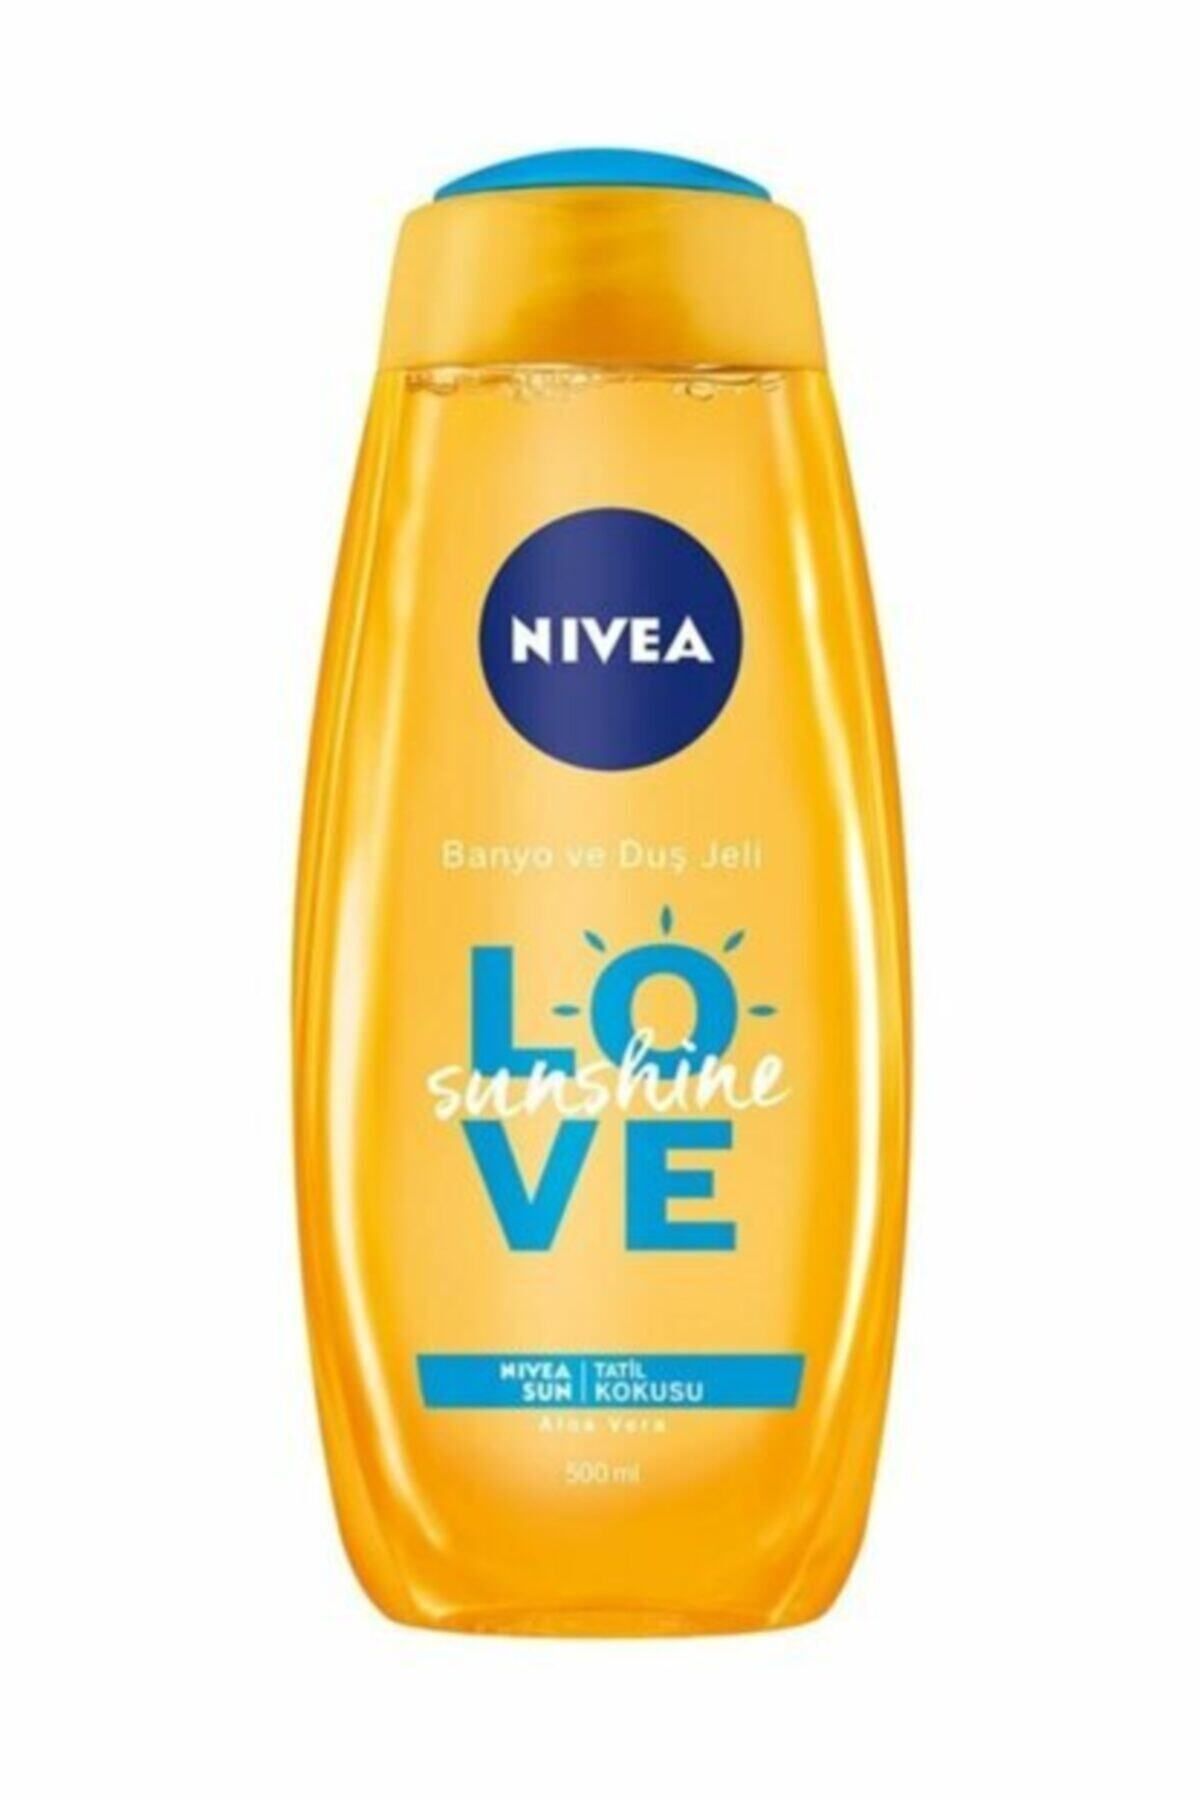 NIVEA Marka: Sunshine Love Banyo Ve Duş Jeli, 500 Ml Kategori: Duş Jeli